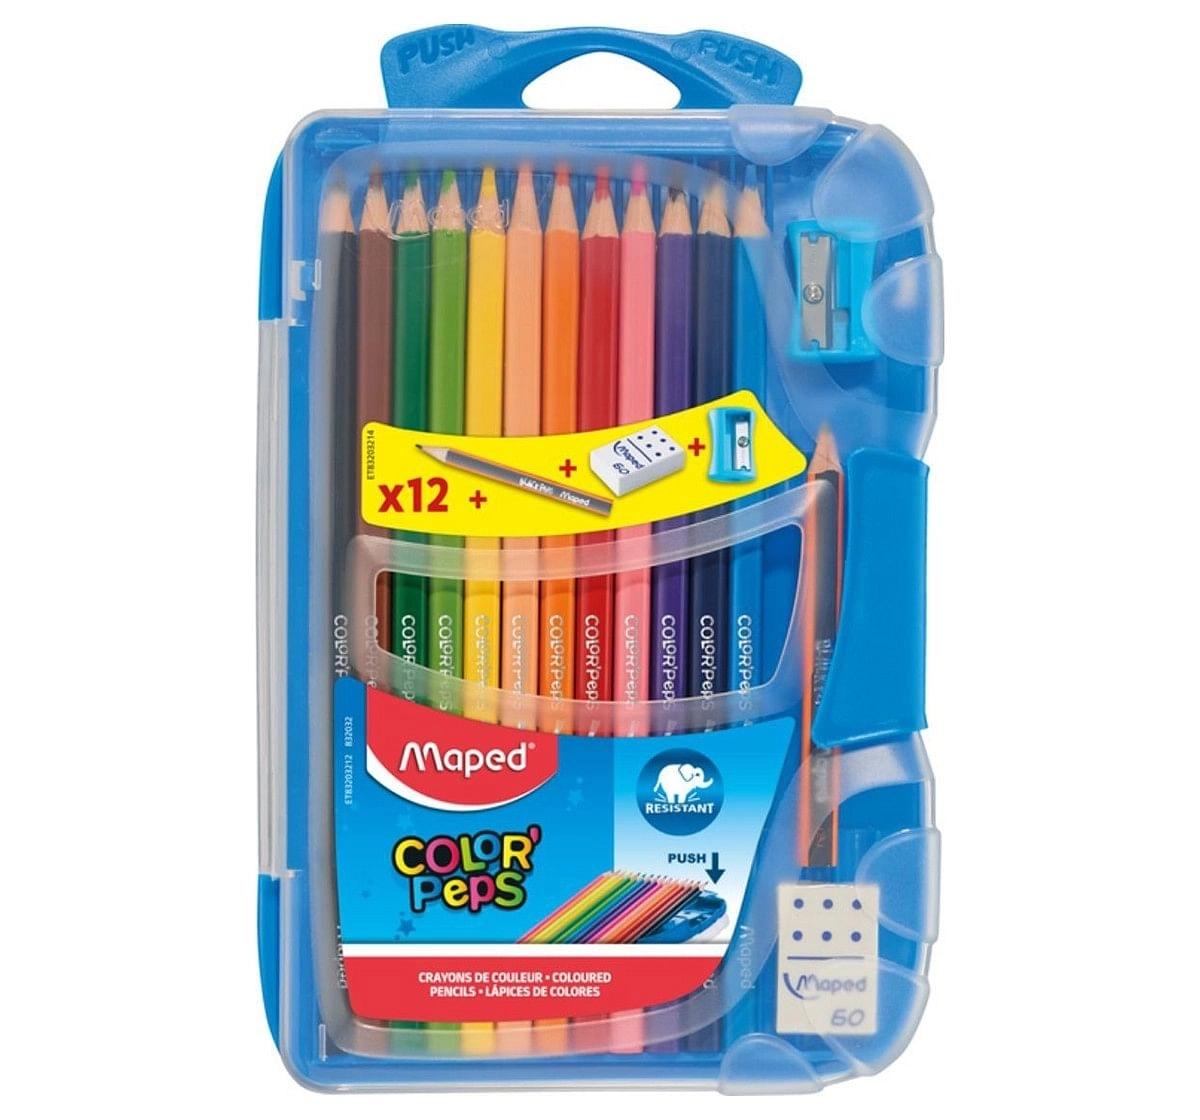 Maped 12 Colour Pencils, 7Y+ (Multicolour)